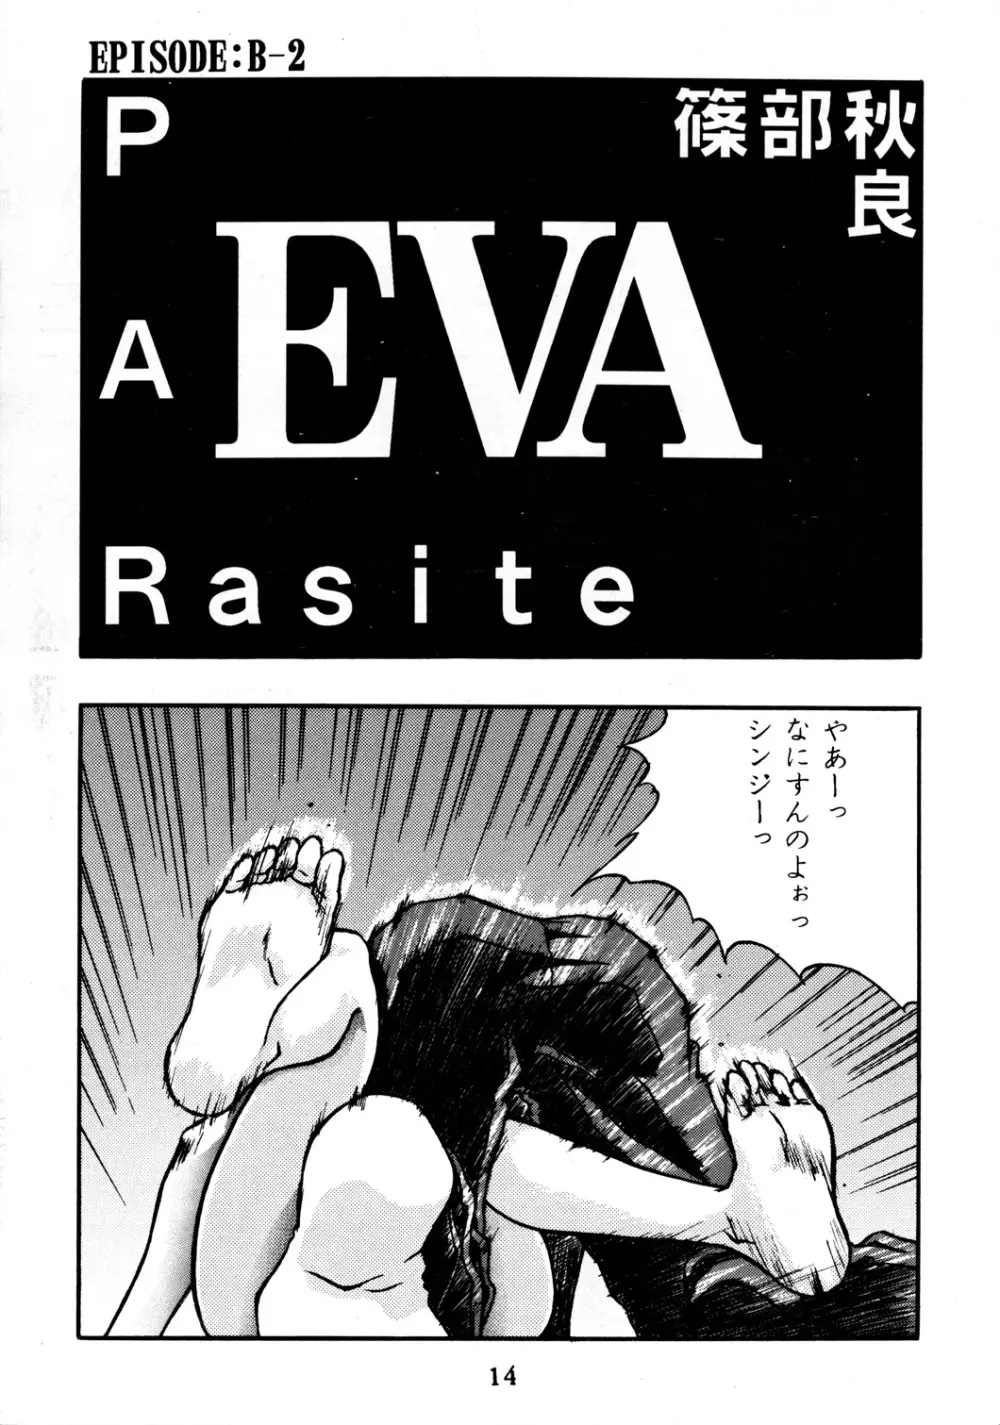 EVA PLUS B WEST JAPAN 仕様 - page13